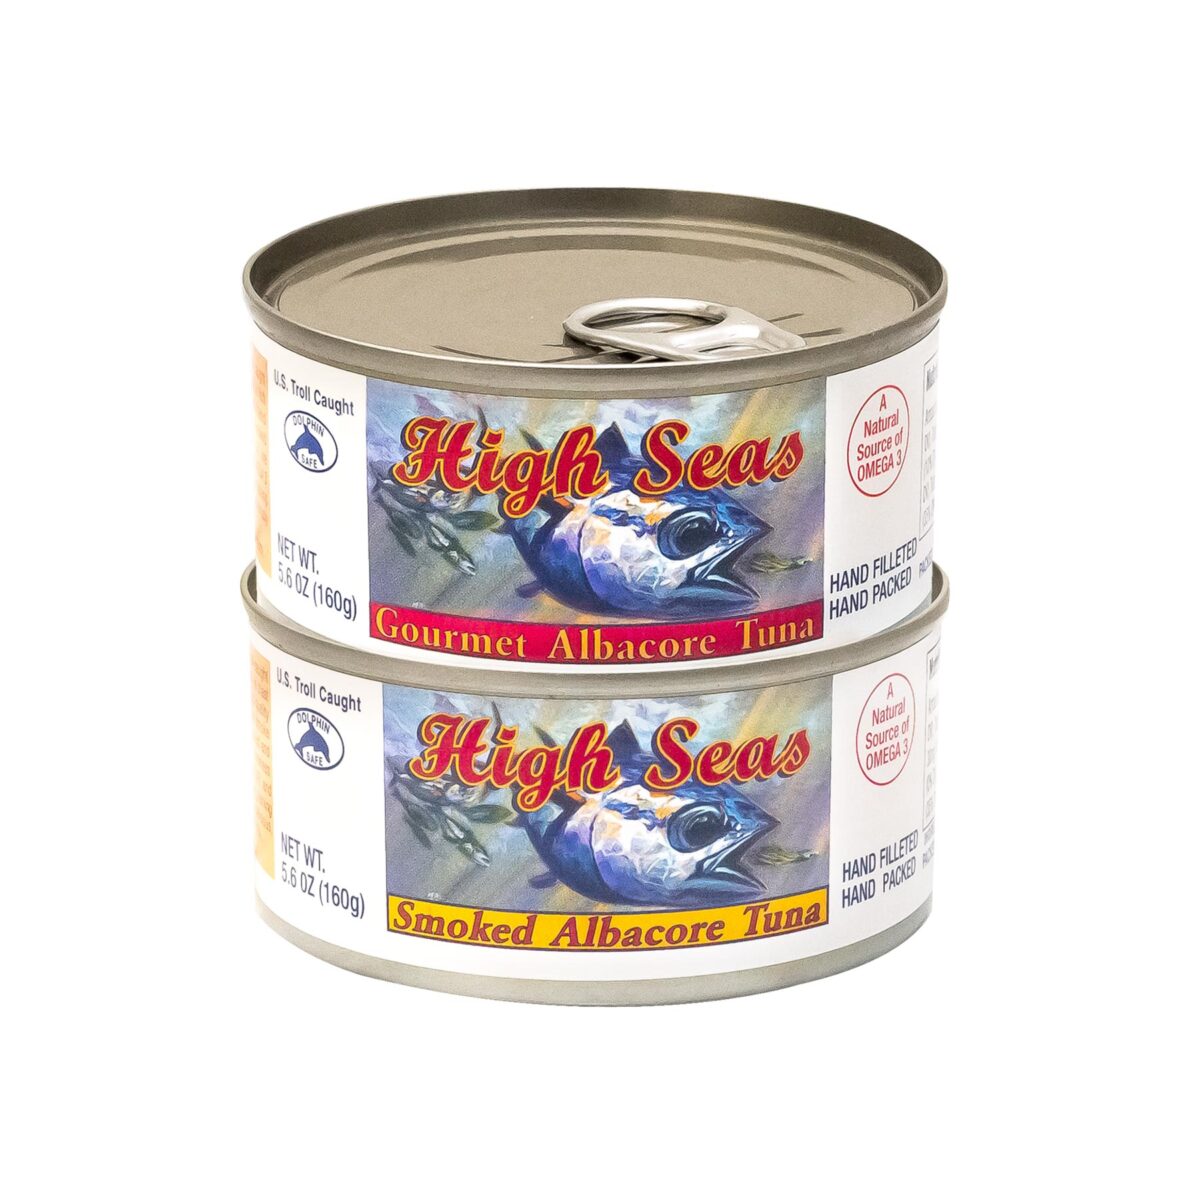 Product shot of Gourmet Albacore Tuna and Smoked Albacore Tuna